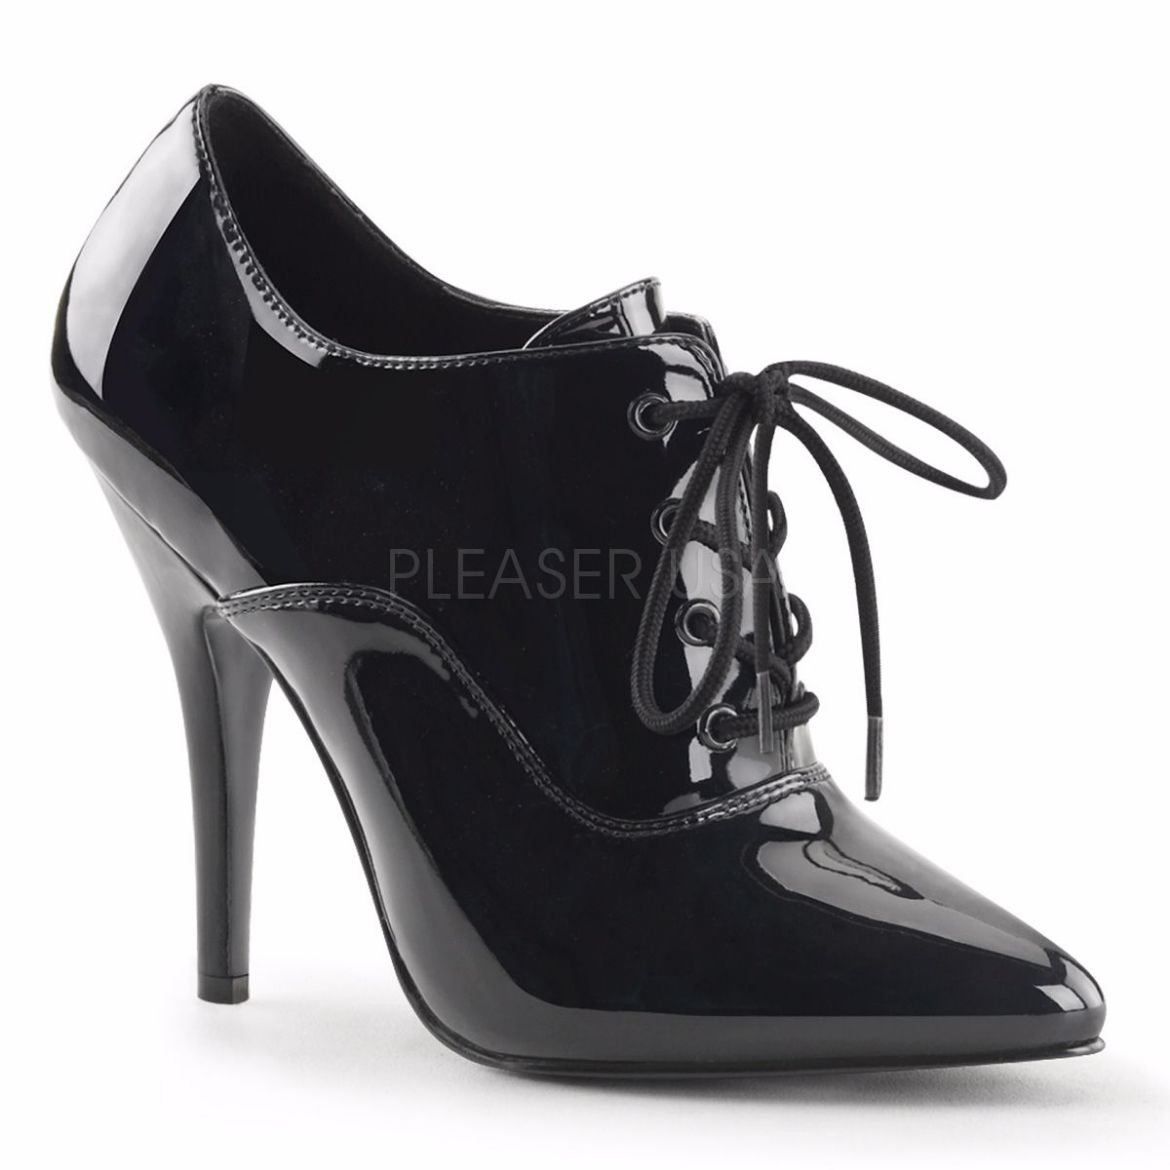 Product image of Pleaser Seduce-460 Black Patent, 5 inch (12.7 cm) Heel Court Pump Shoes